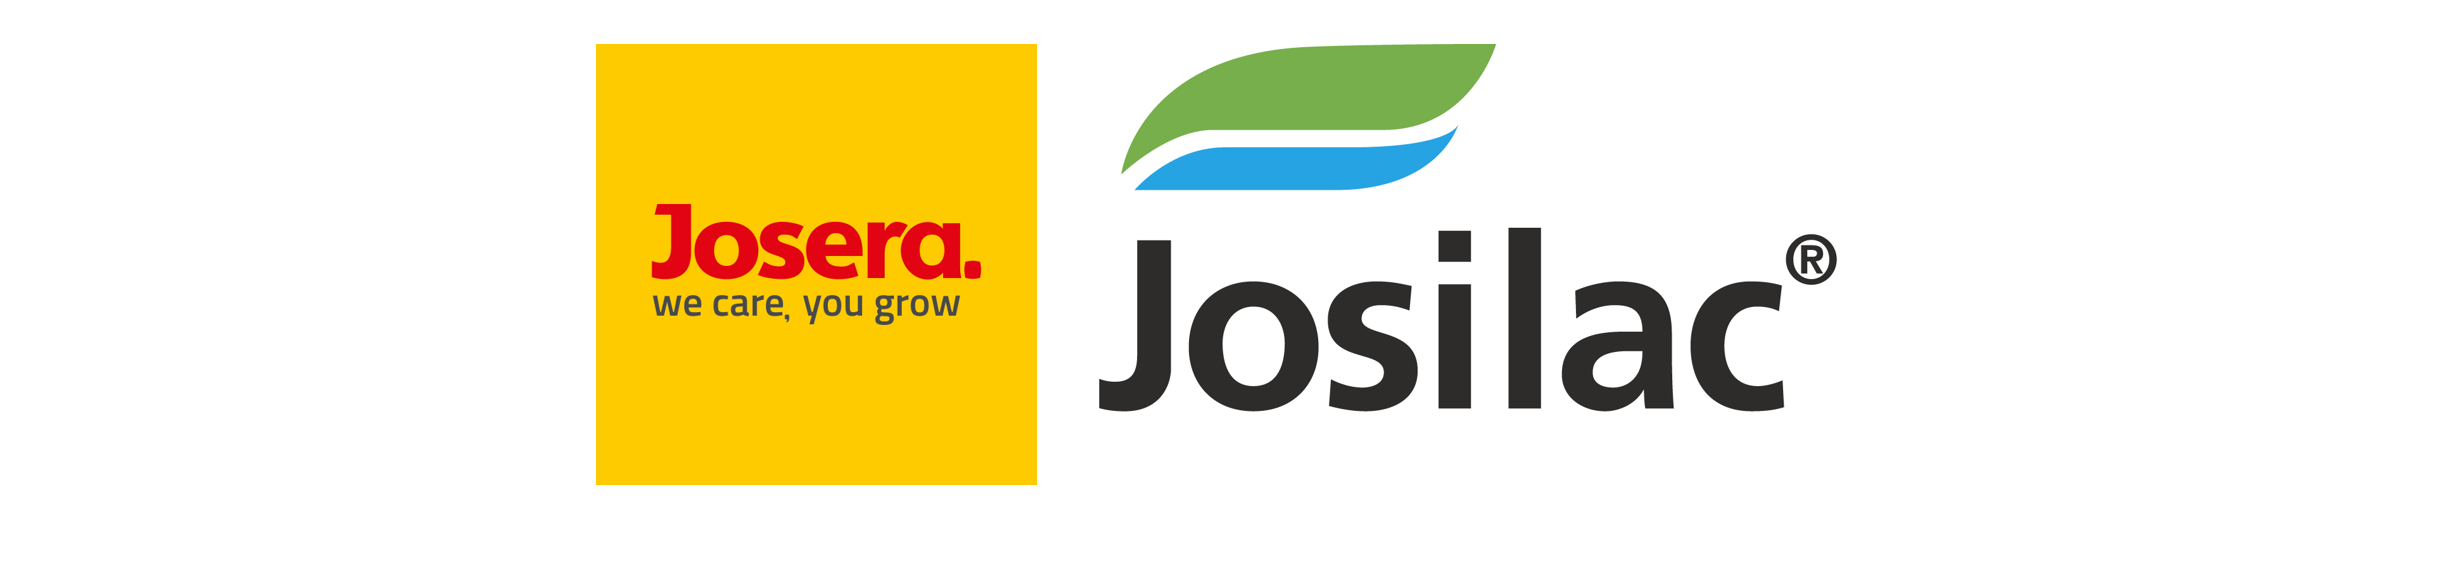 Logo Josera und Josilac